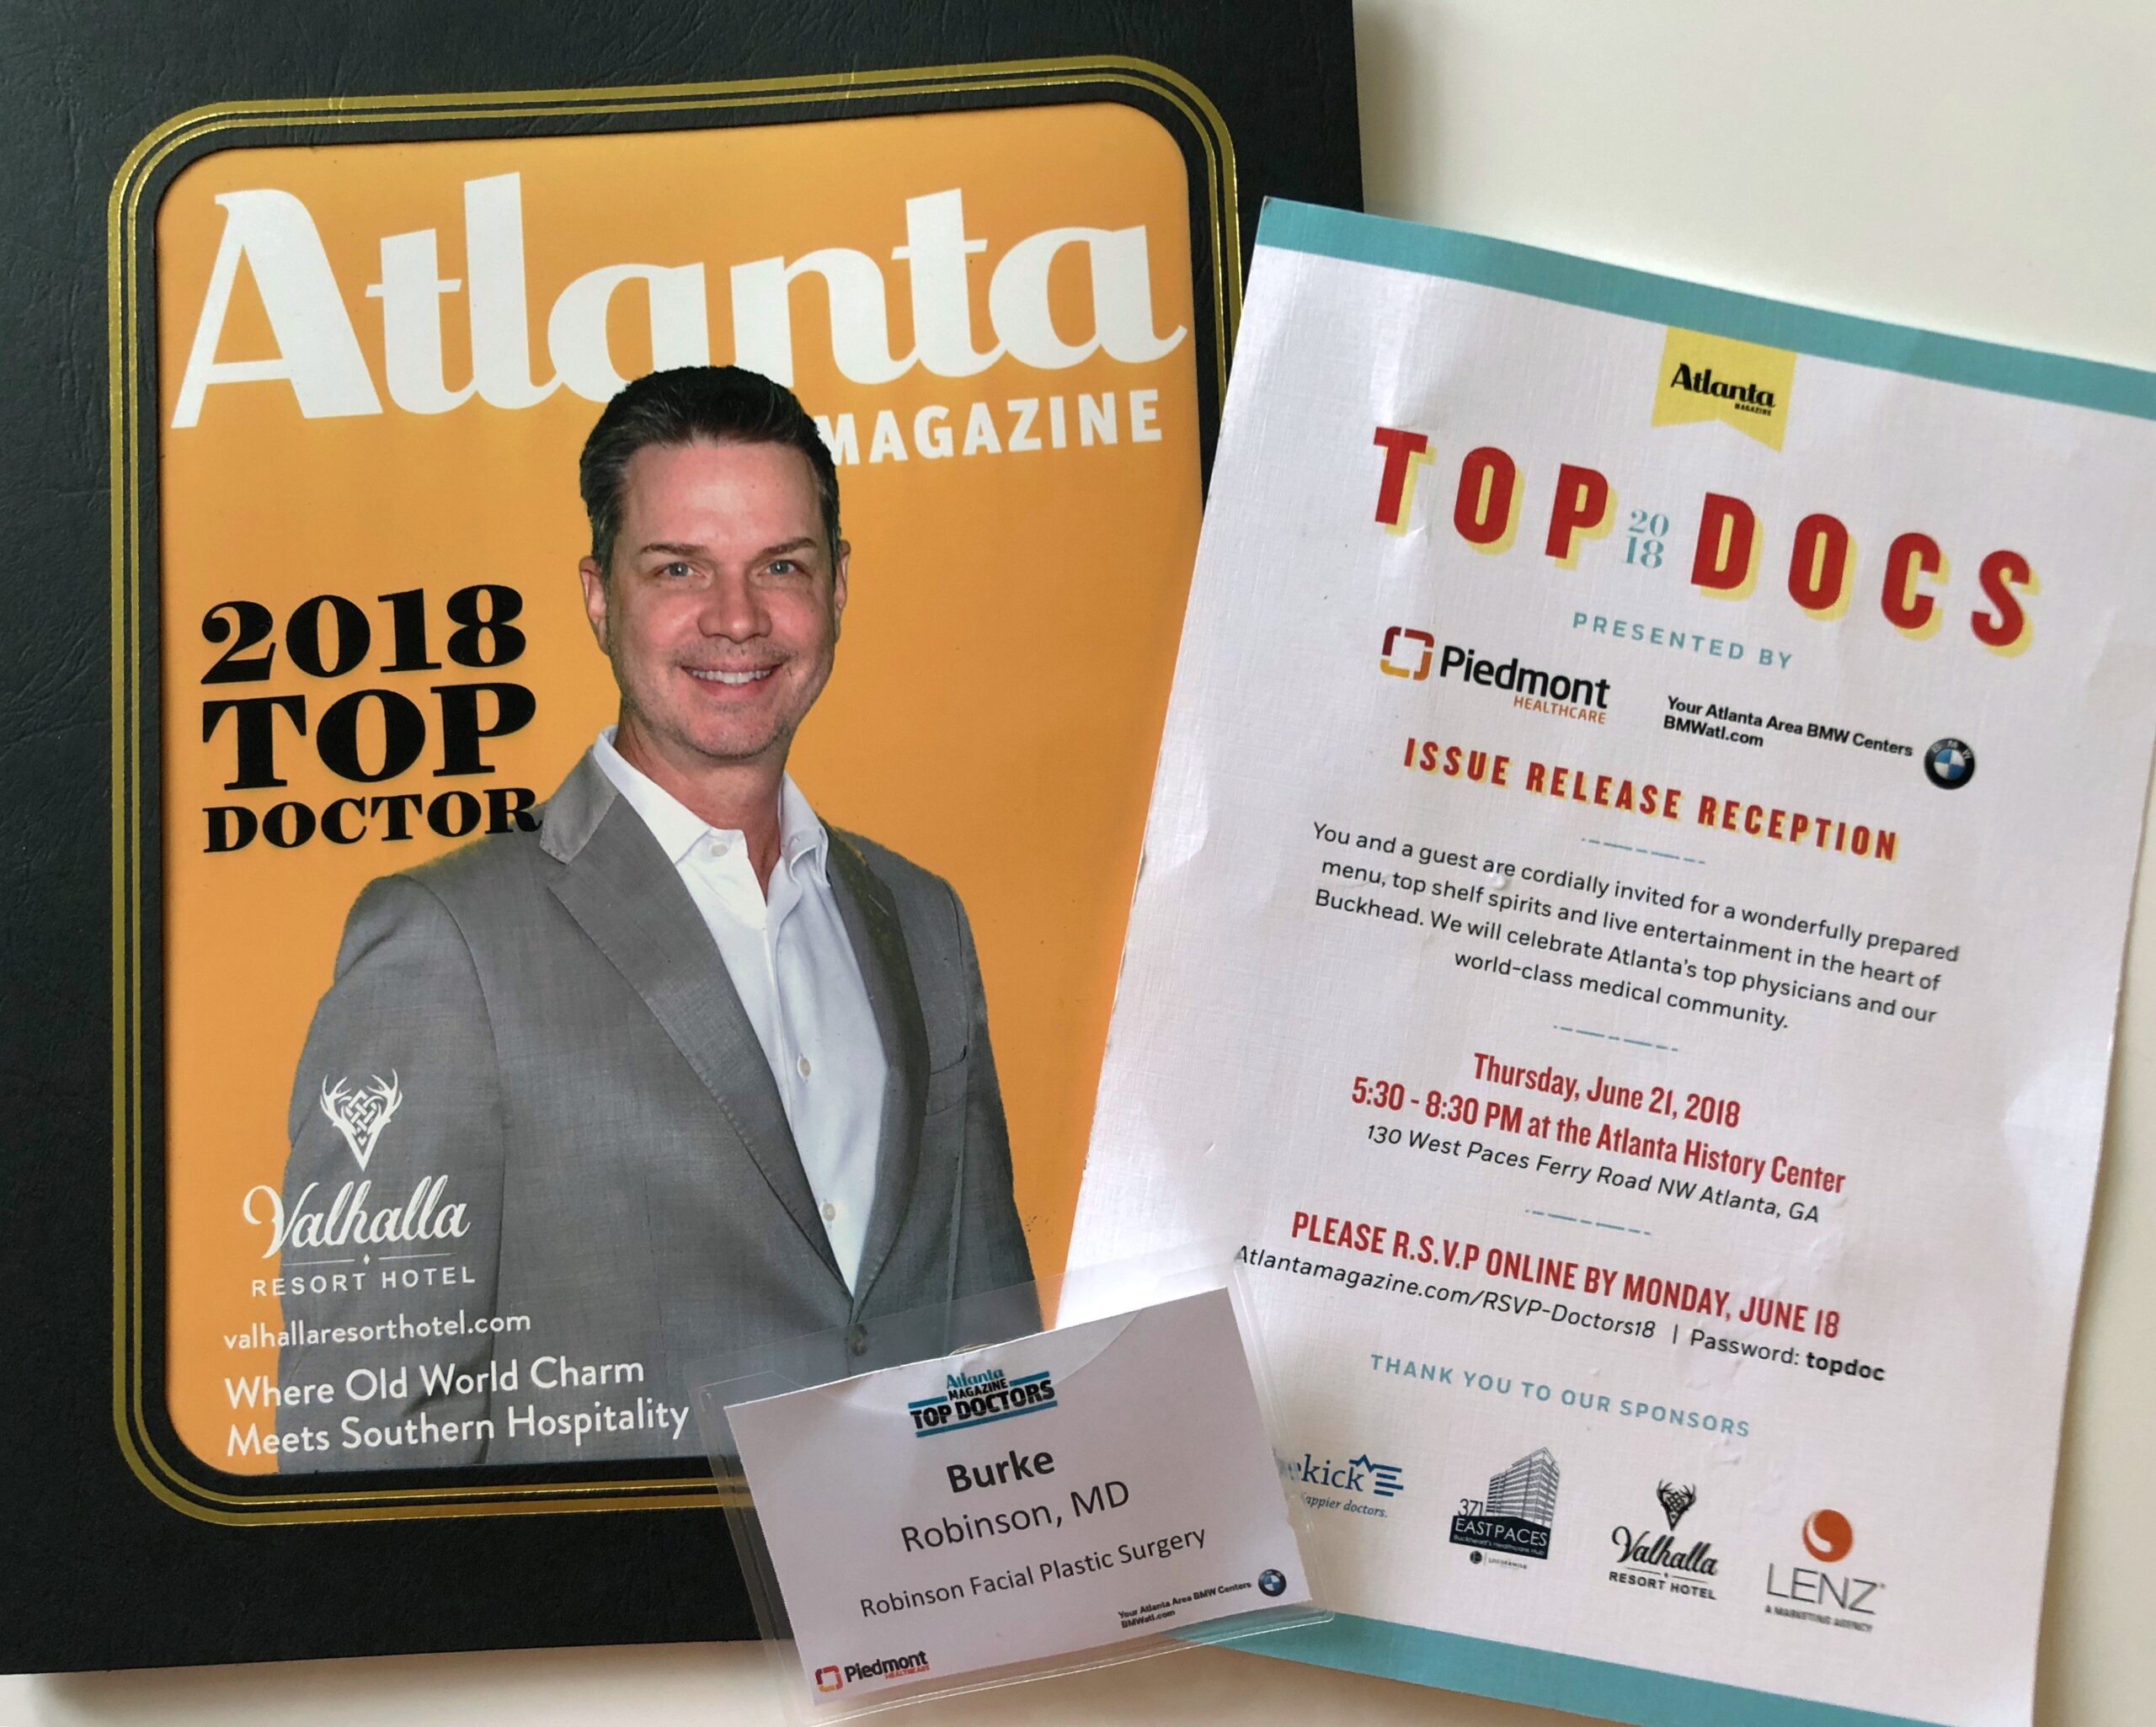 Atlanta Magazine Top Doctor 2018